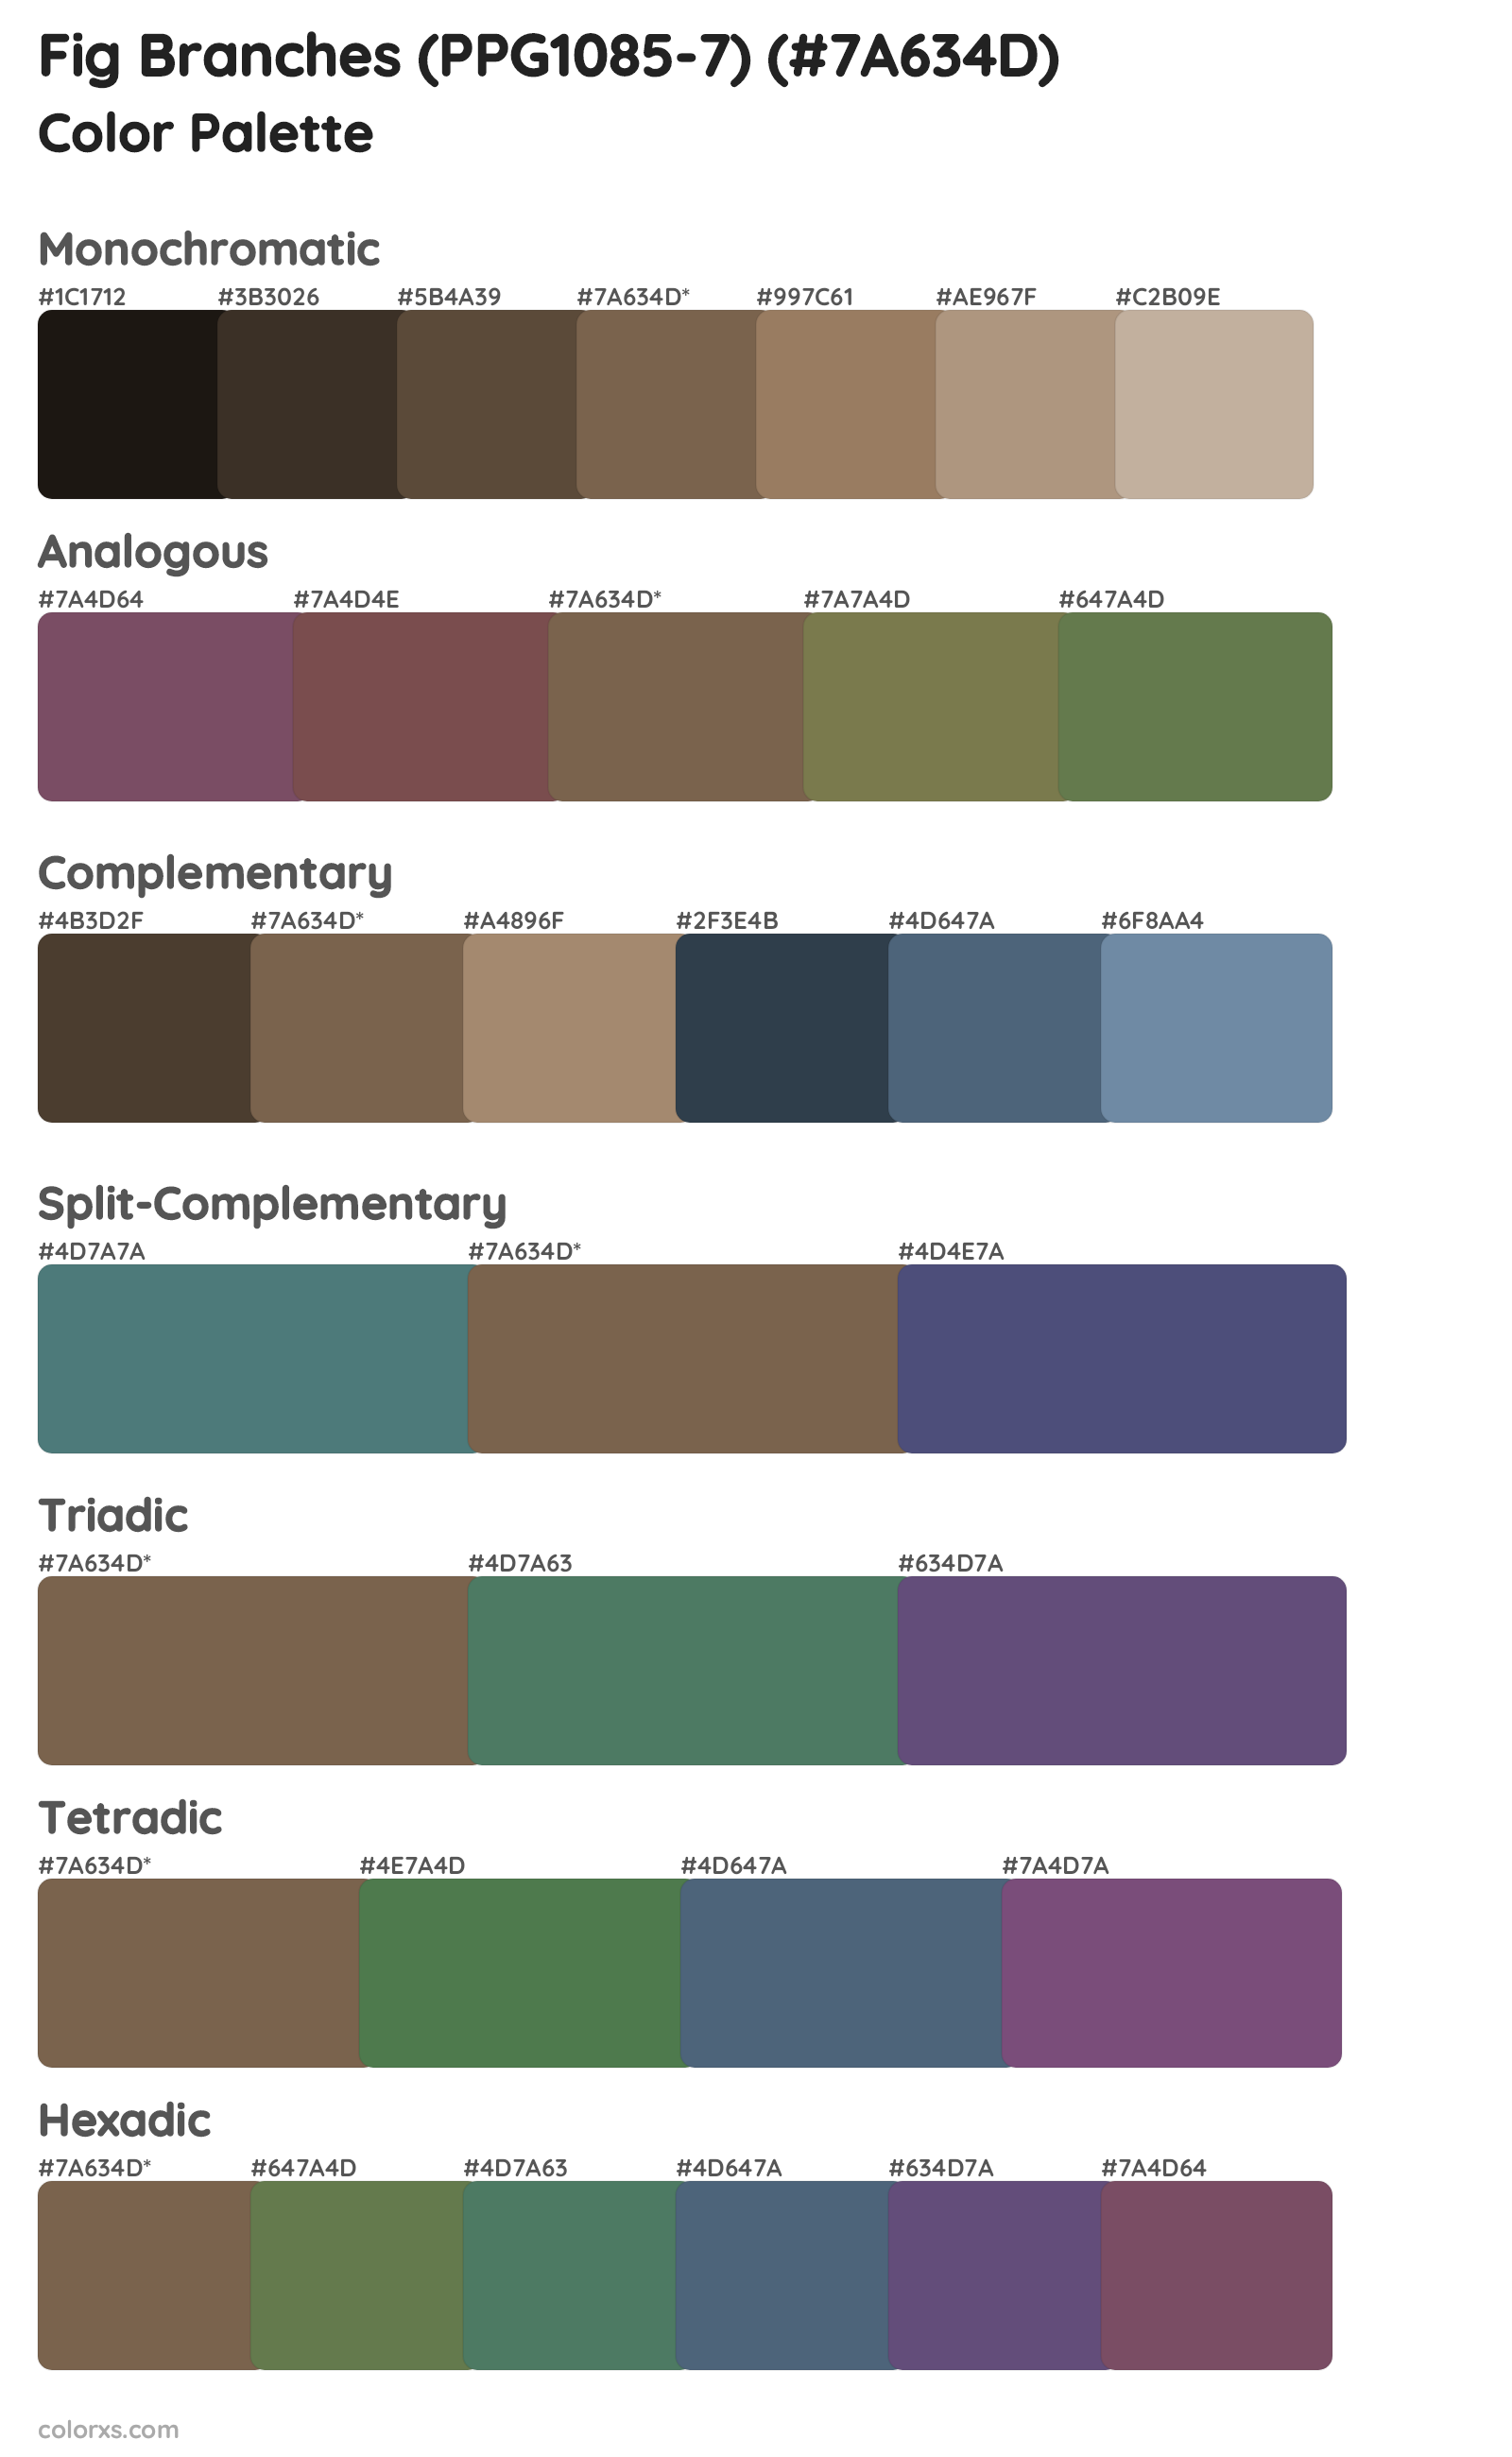 Fig Branches (PPG1085-7) Color Scheme Palettes